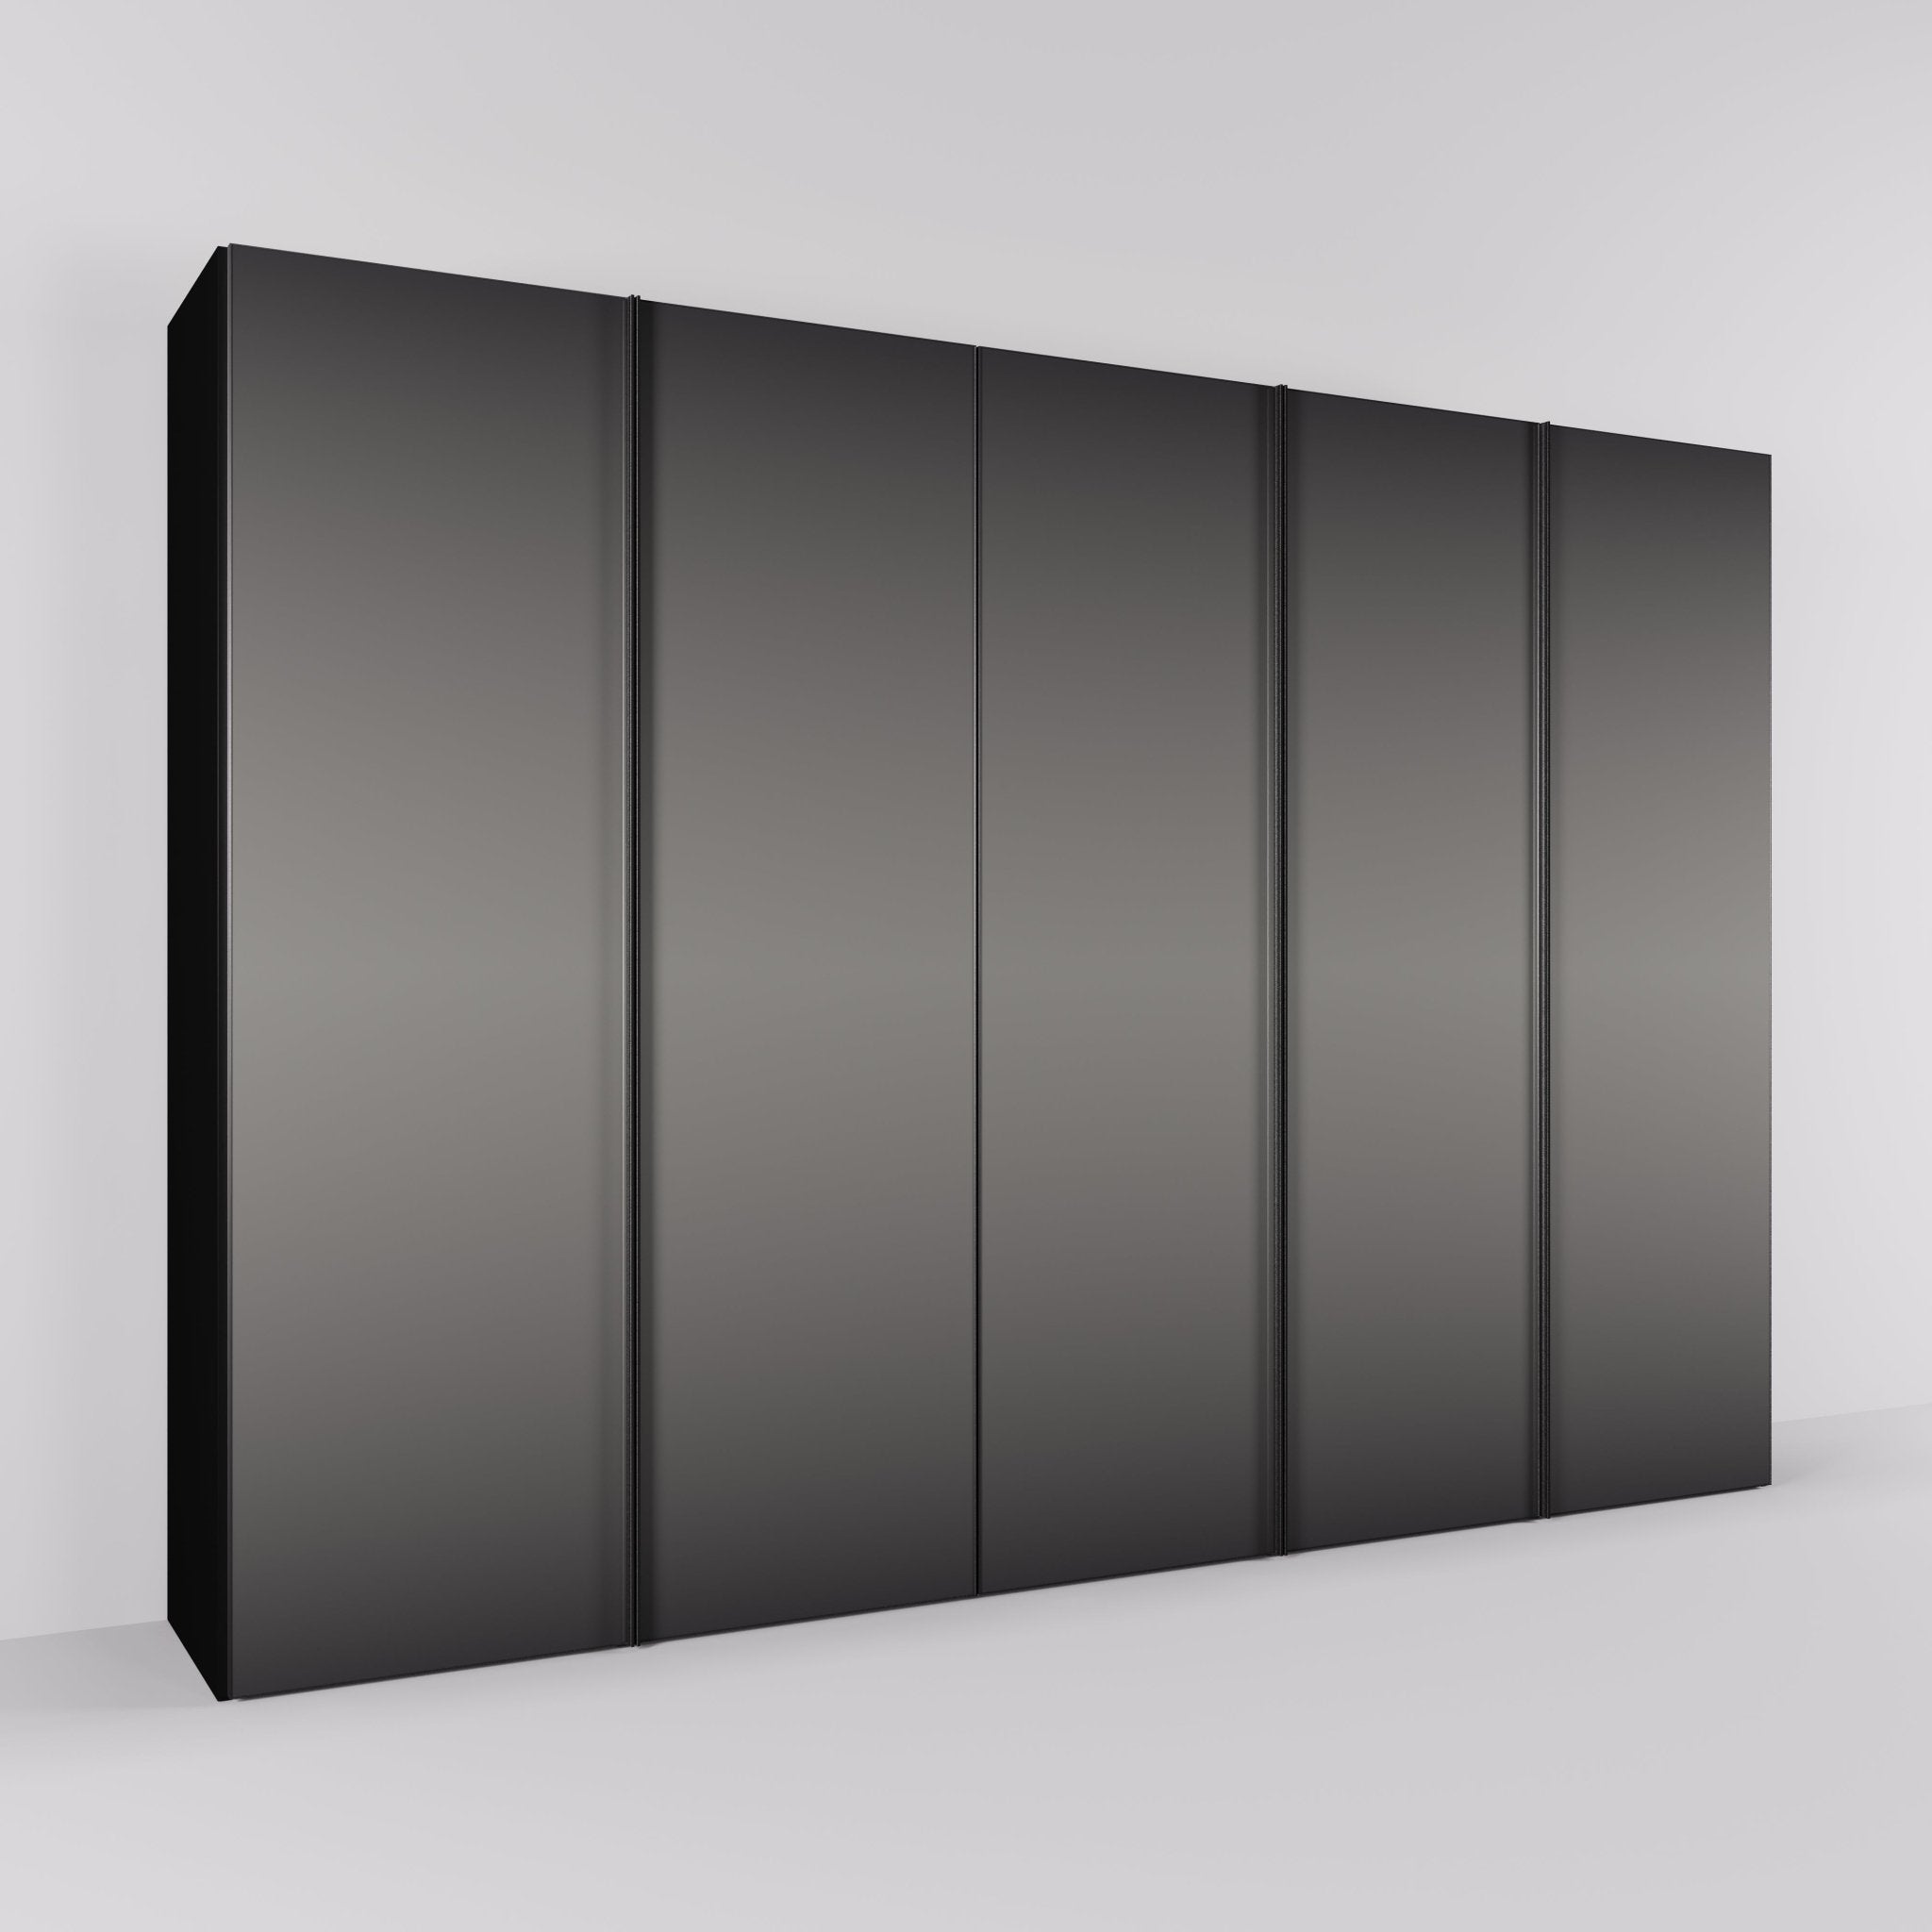 Kledingkast Levante in graphite met rook spiegelglas | 303 cm breed - Matteo studio B.V.